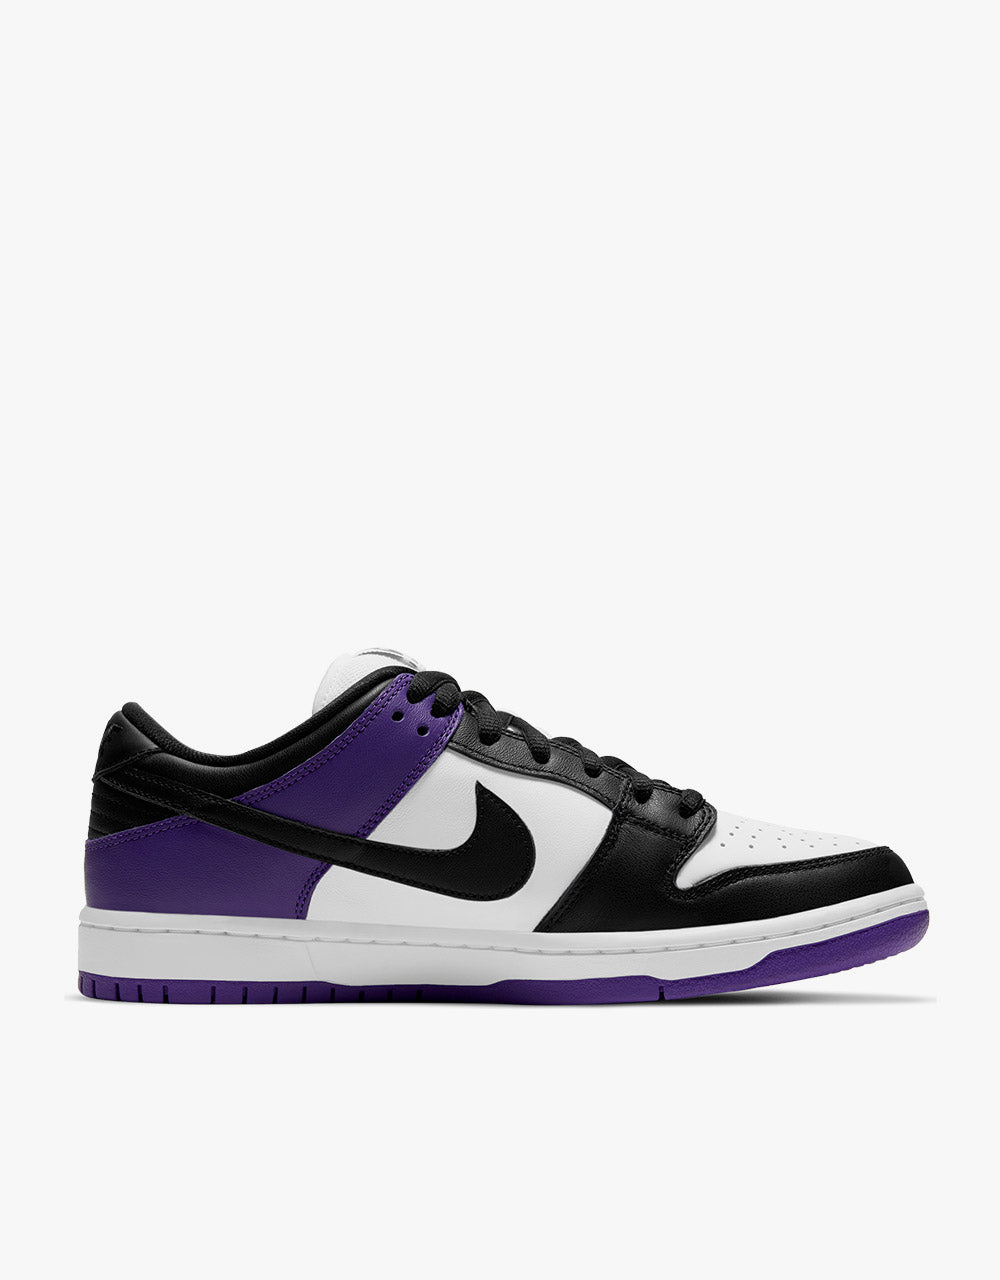 Nike SB Dunk Low Pro Skate Shoes - Court Purple/Black-White-Court Purple